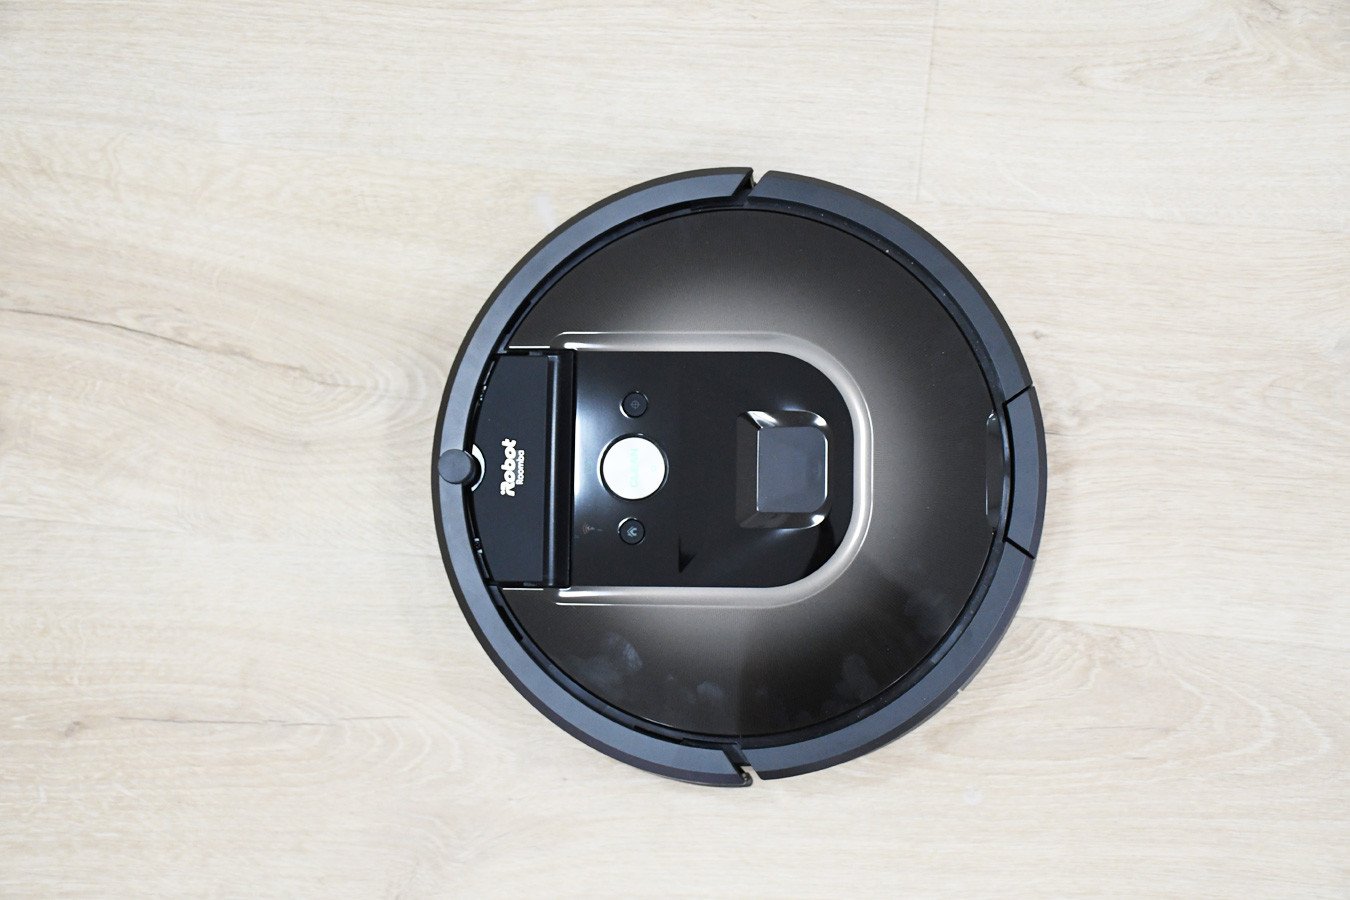 Roomba iRobot 980 Robot Vacuum cleaner